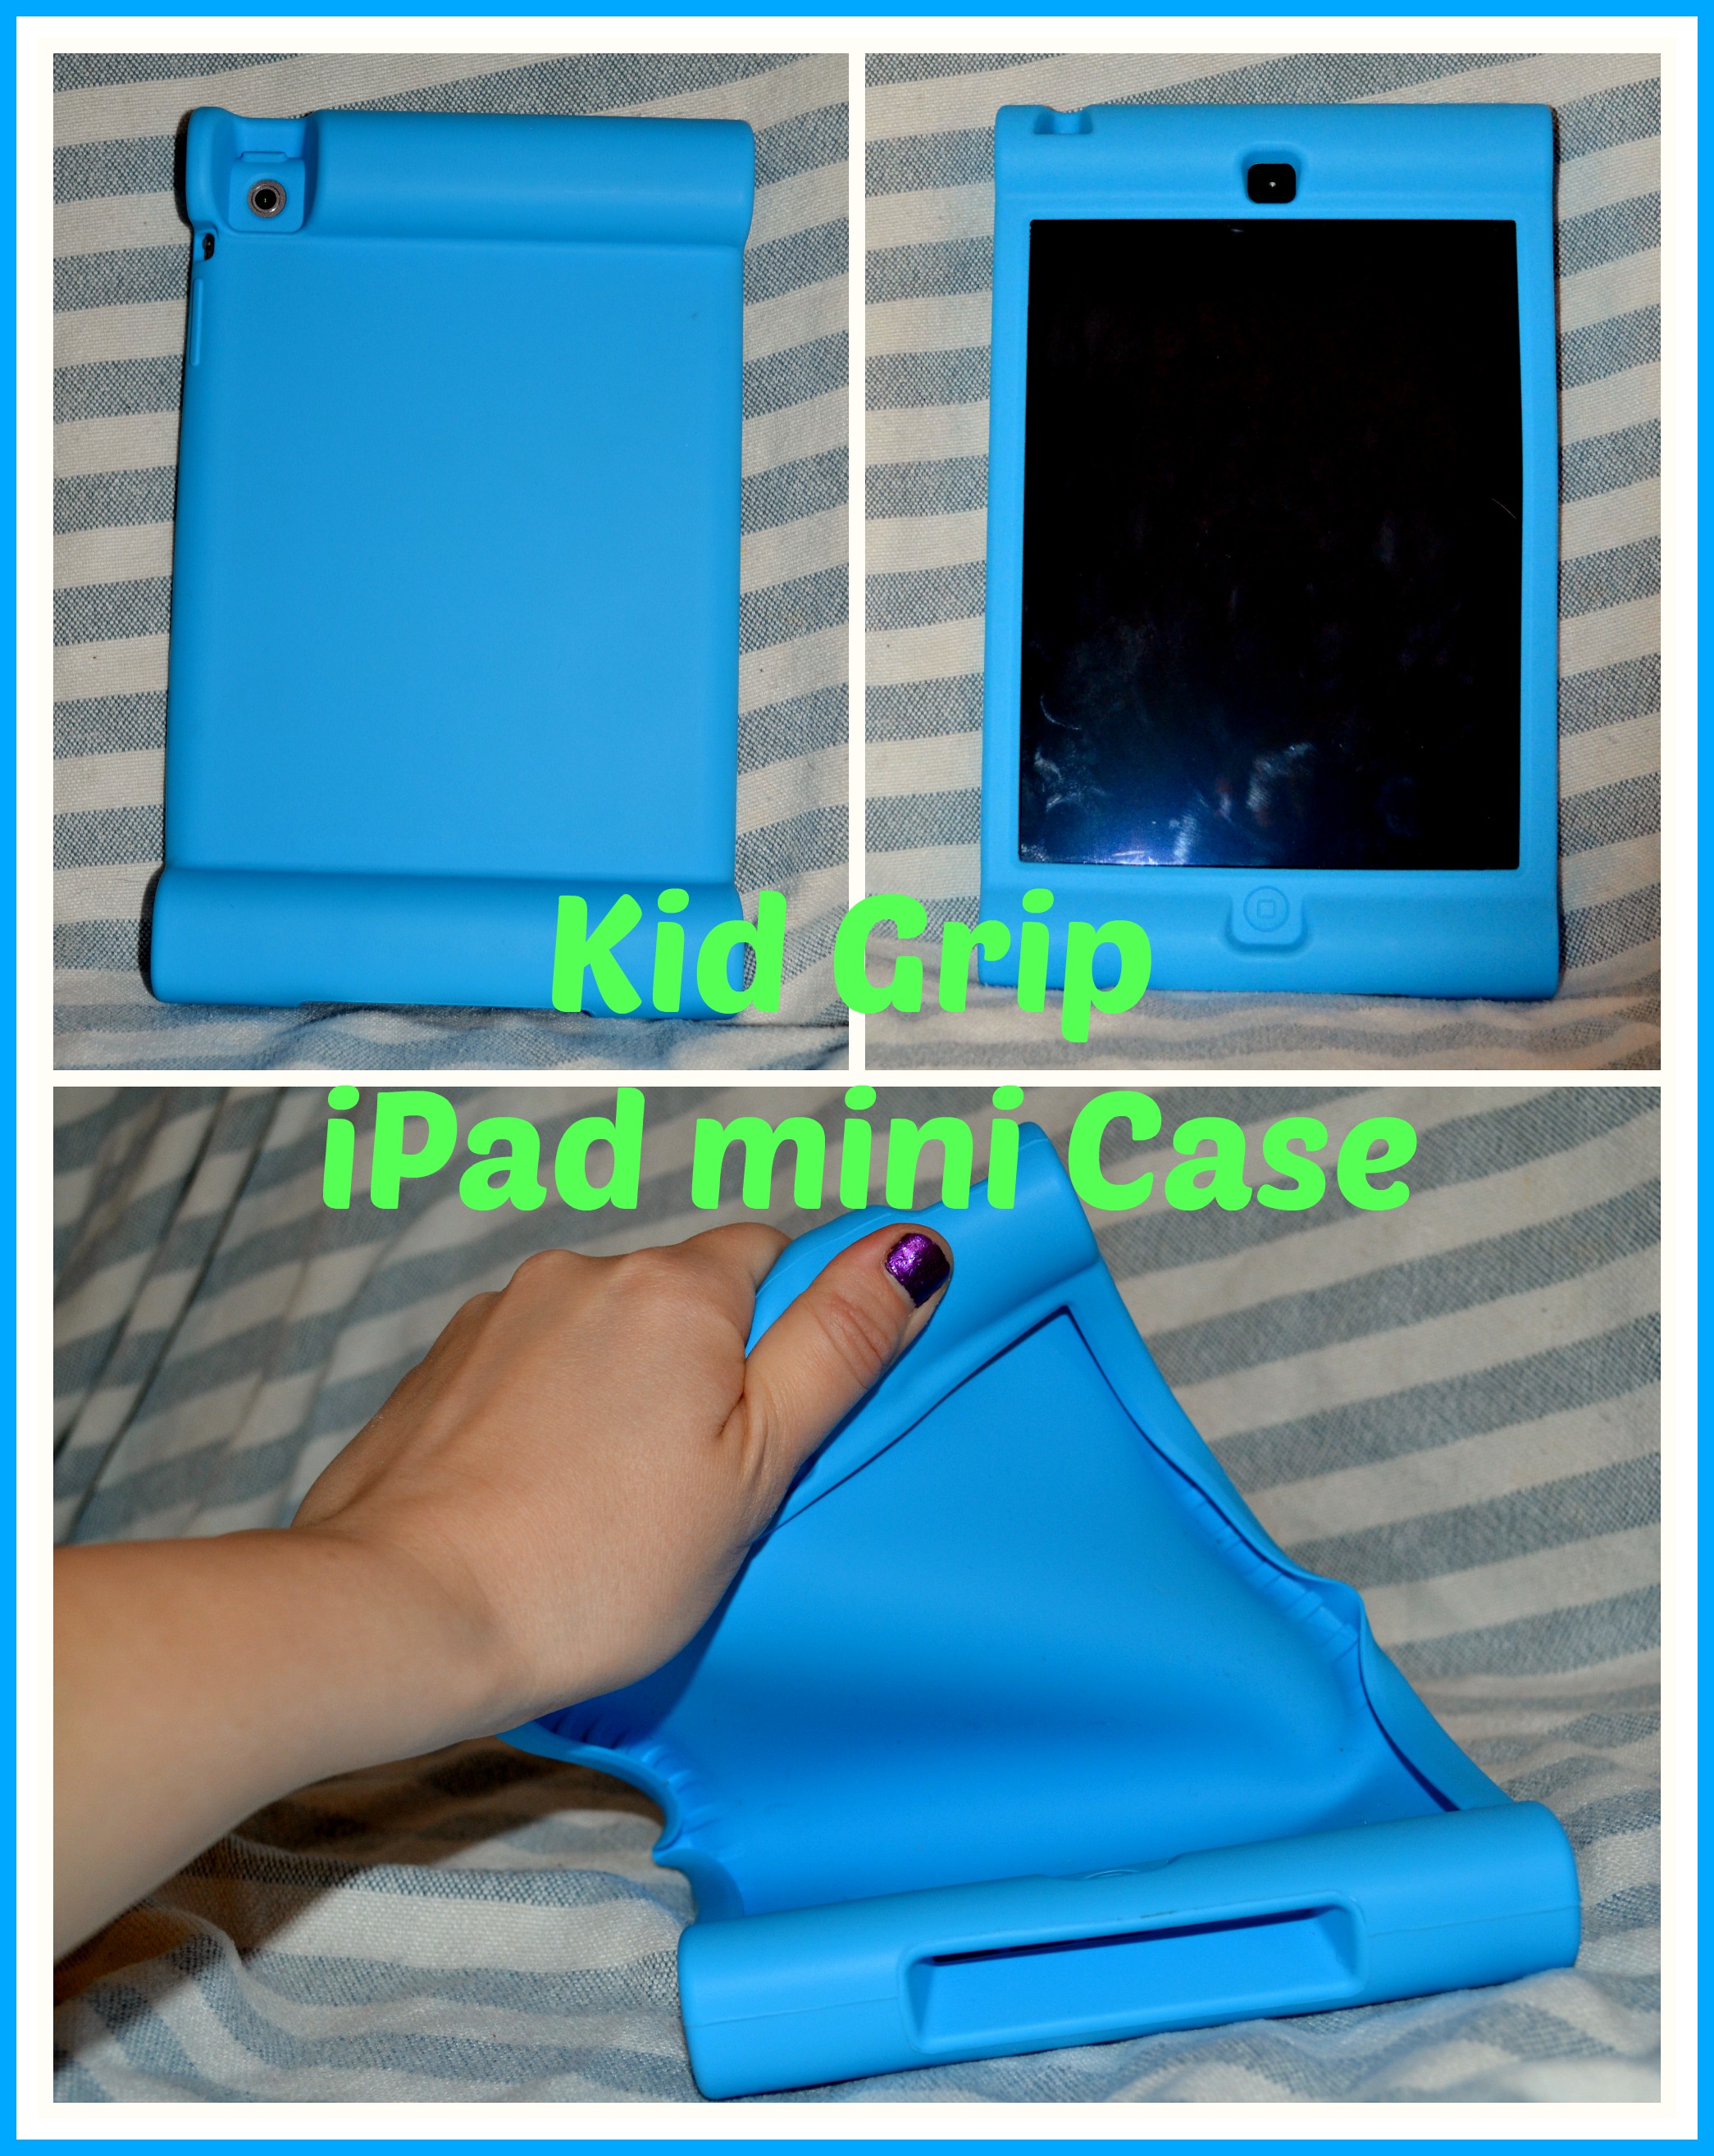 Boxwave iPad Mini Accessories Review